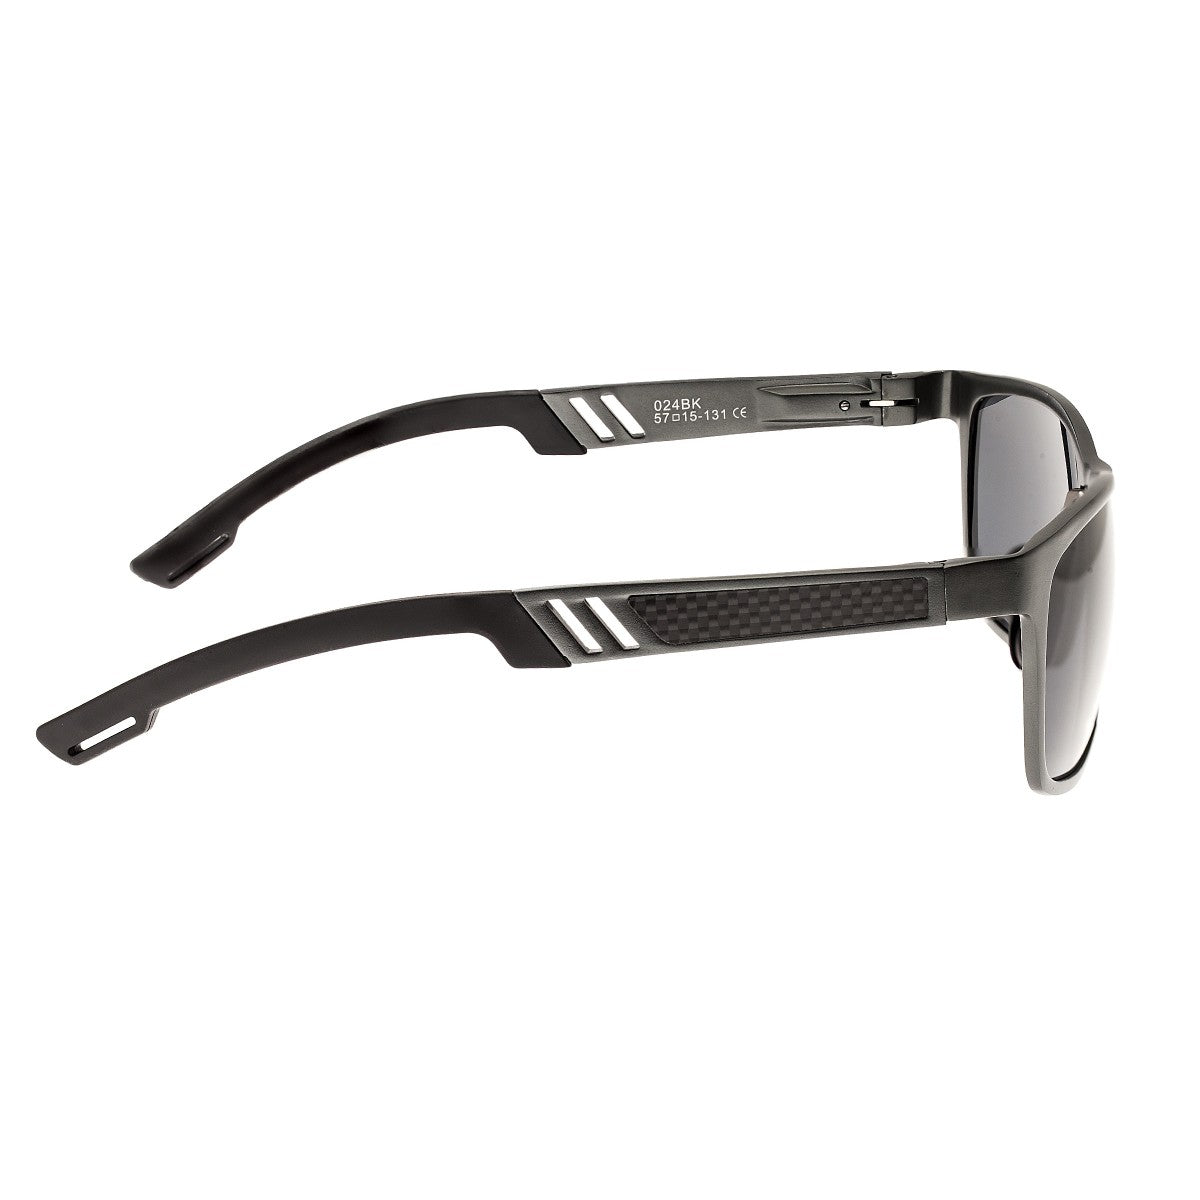 Breed Pyxis Titanium Polarized Sunglasses - Gunmetal/Black - BSG024BK